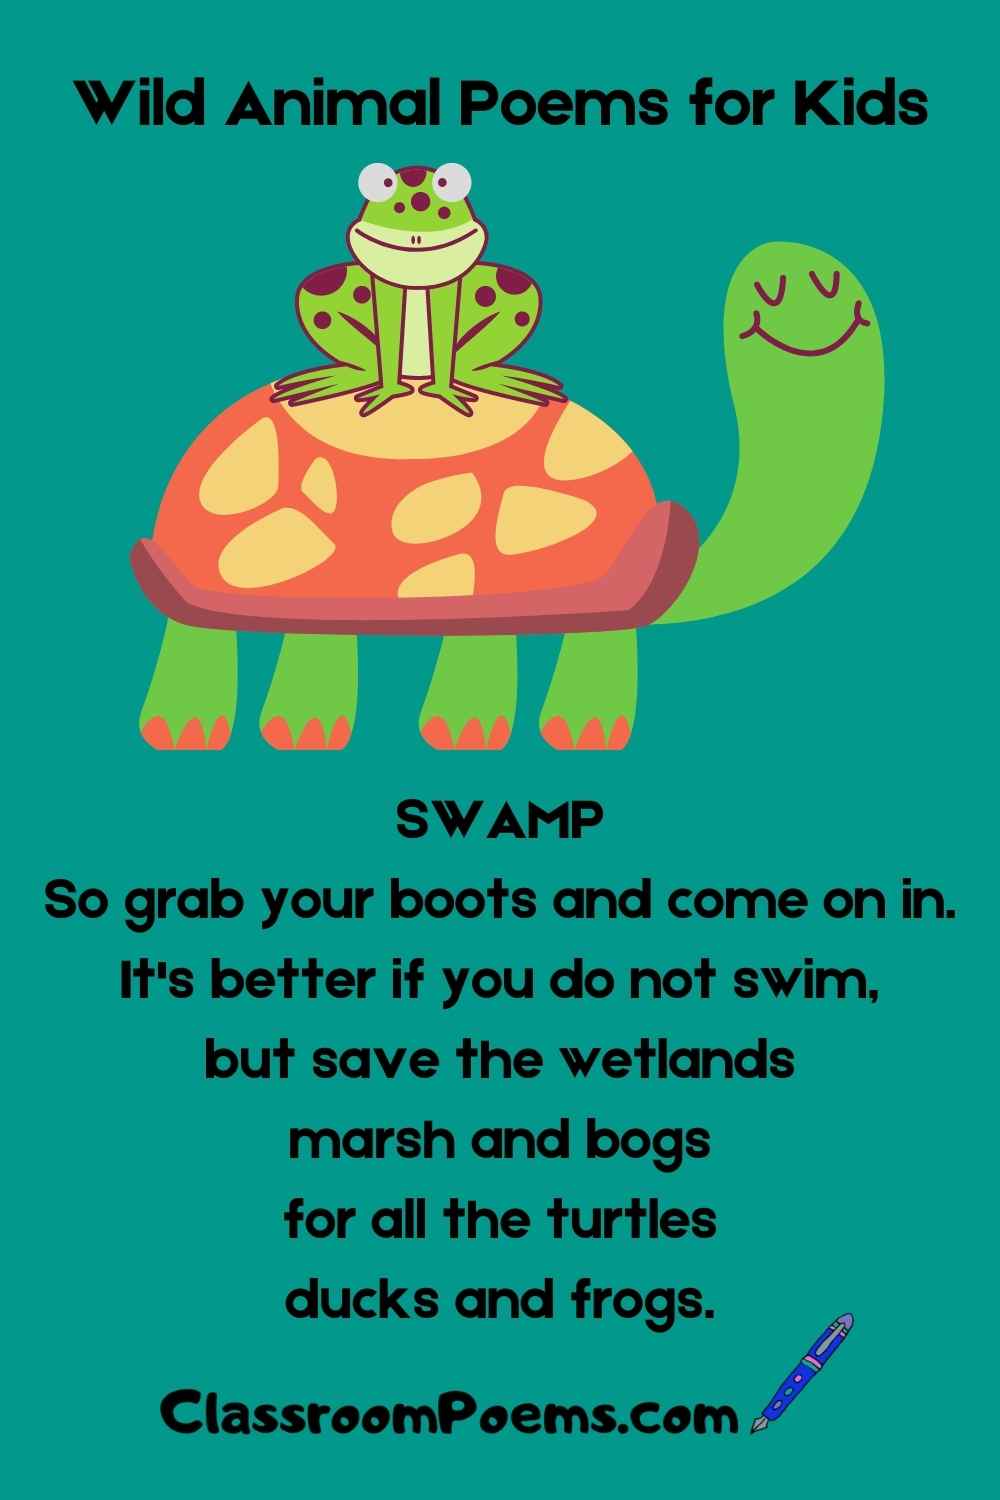 Swamp poem, wild animal poems for kids on ClassroomPoems.com